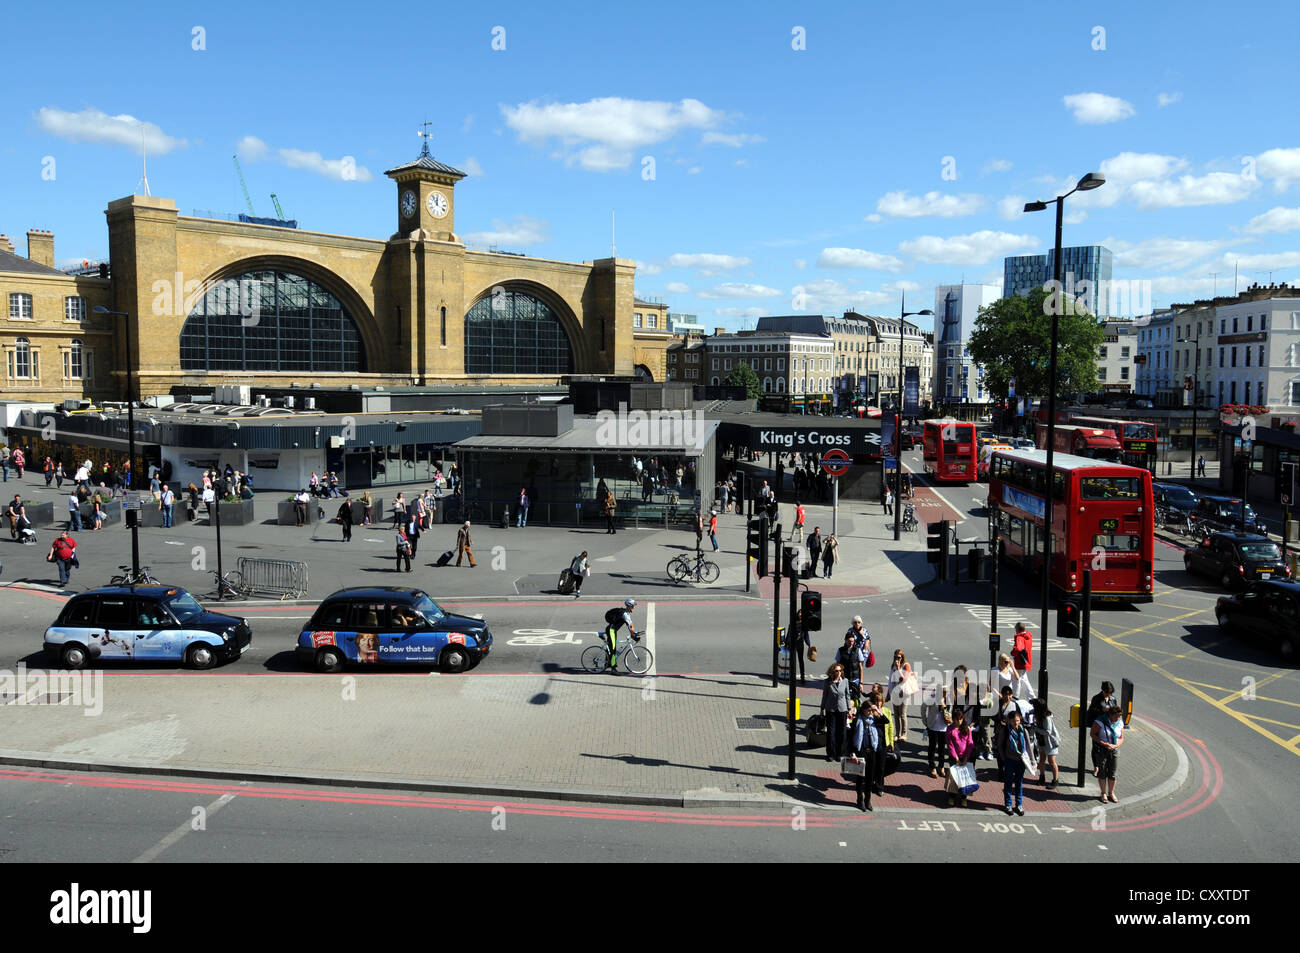 La gare de King's Cross, Camden, London, Angleterre, Royaume-Uni Banque D'Images